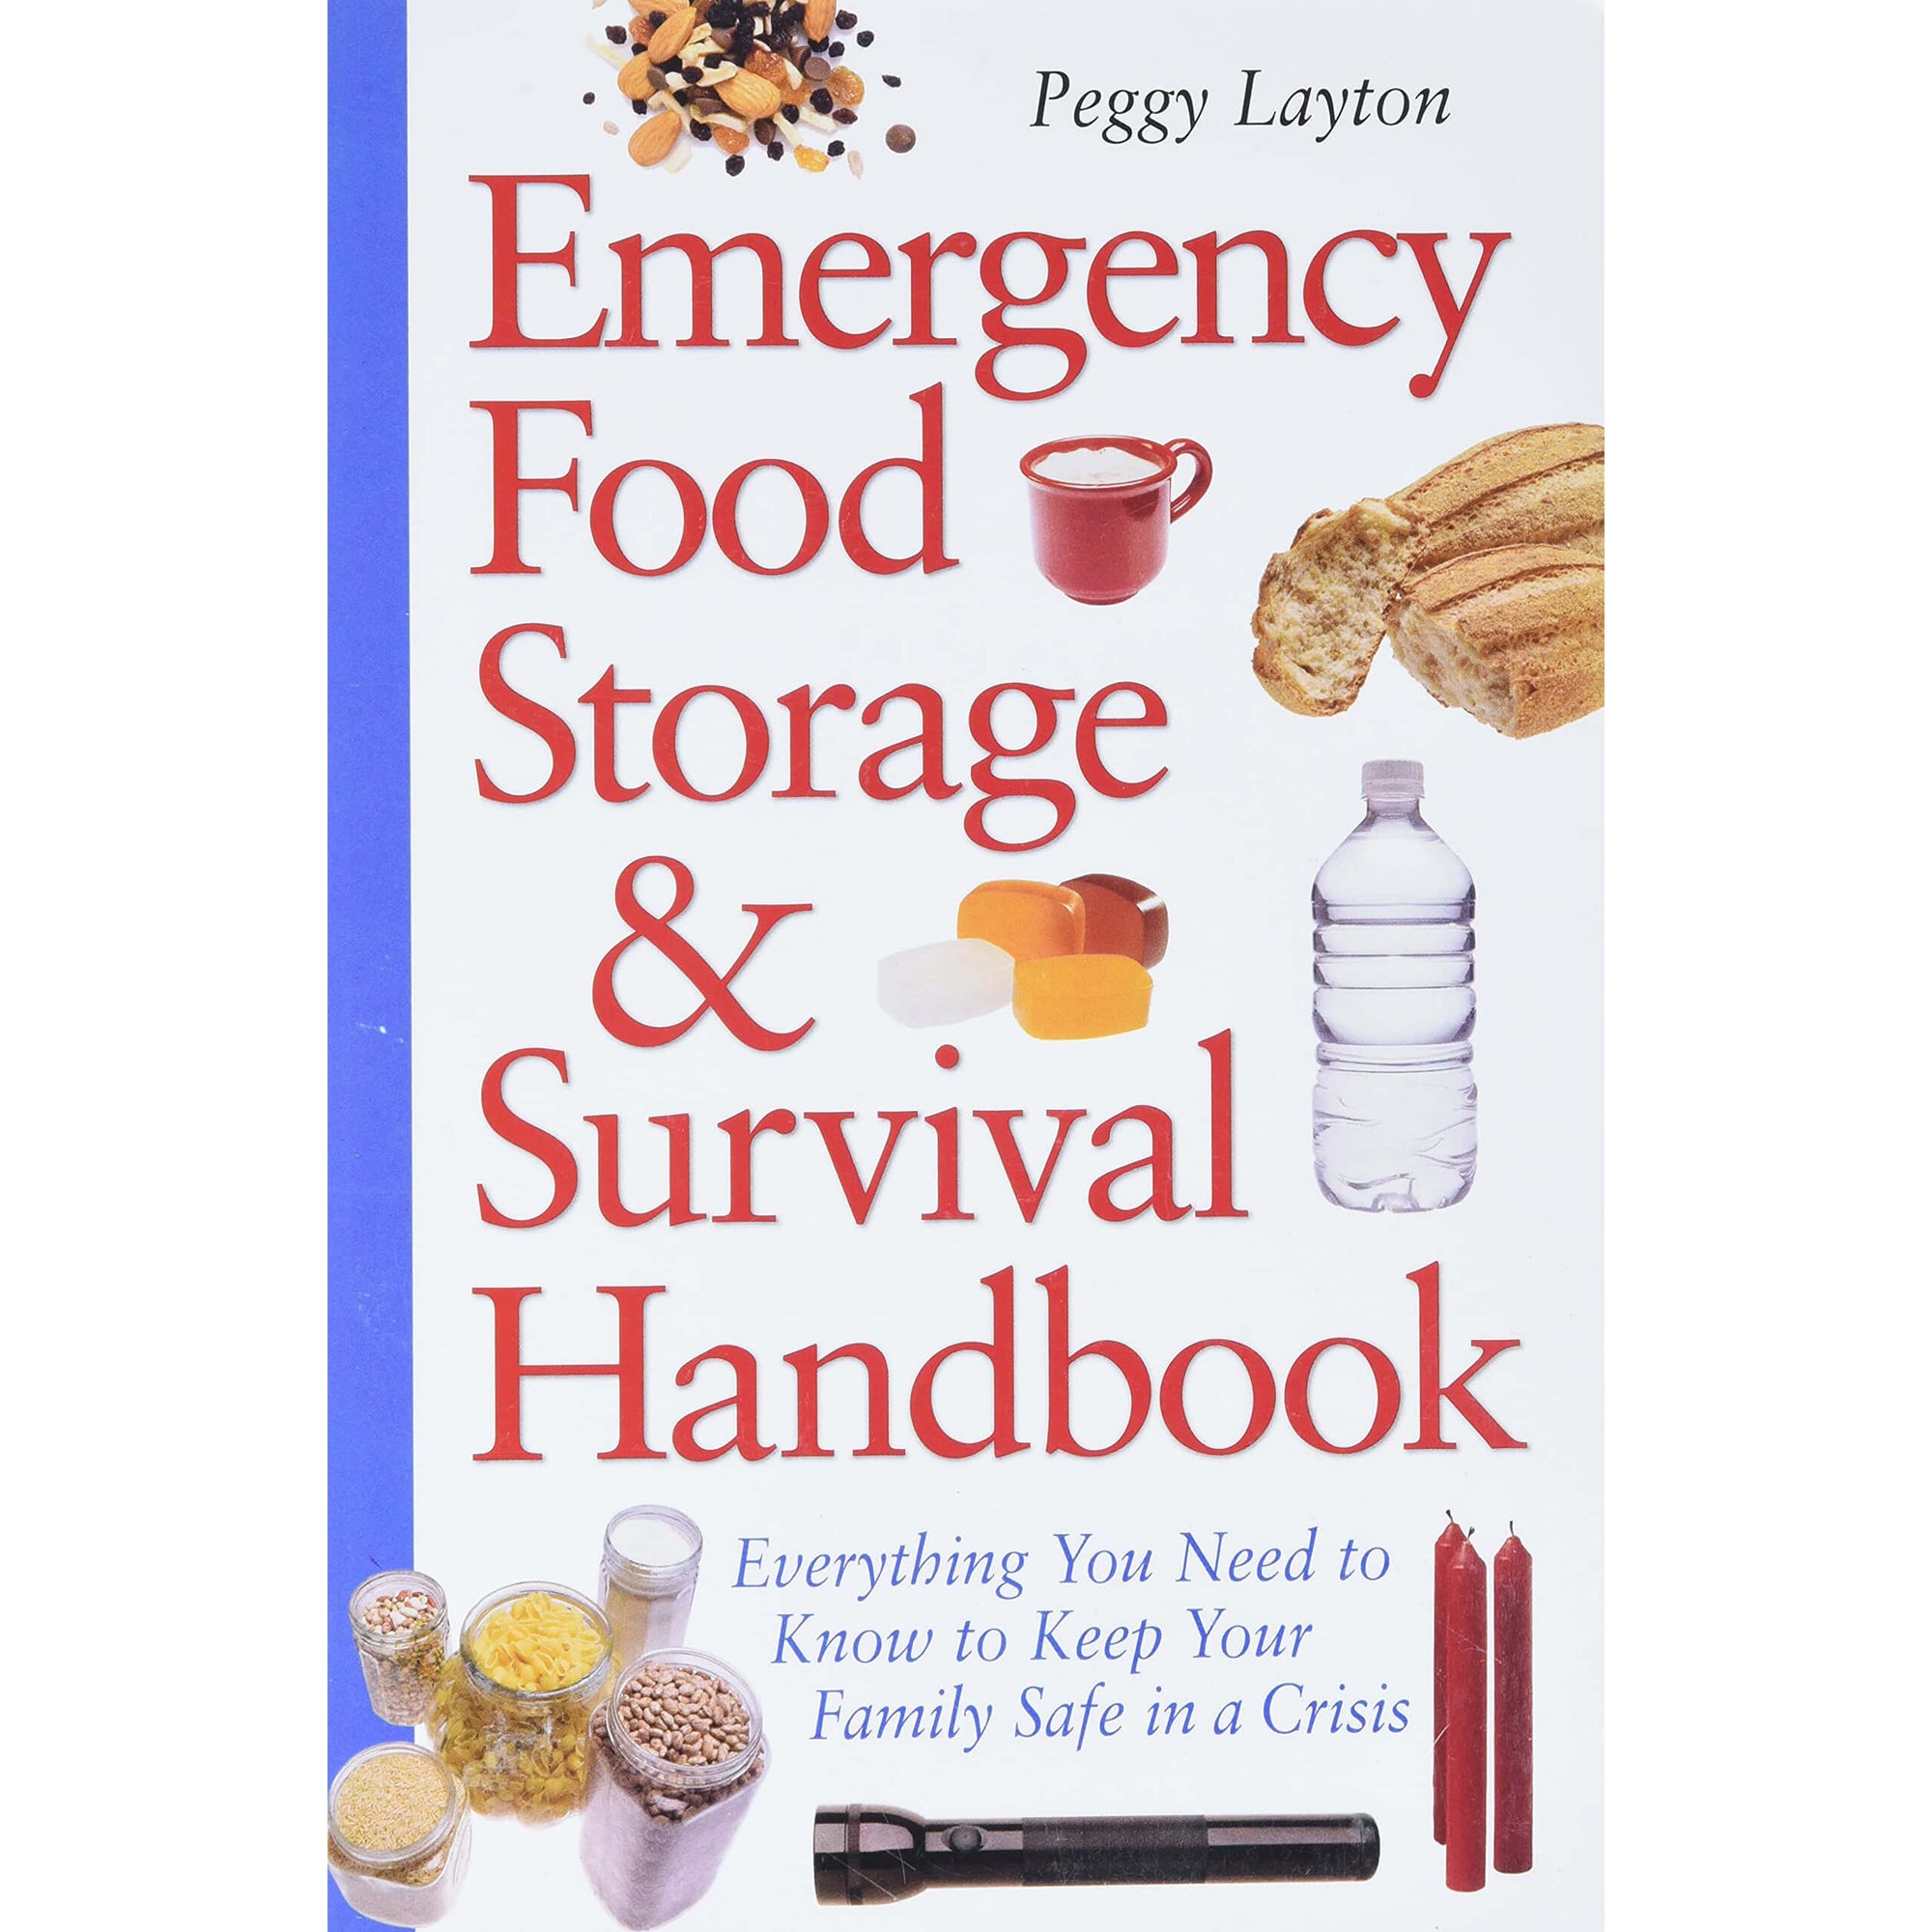 Emergency Food Storage & Survival Handbook front cover.